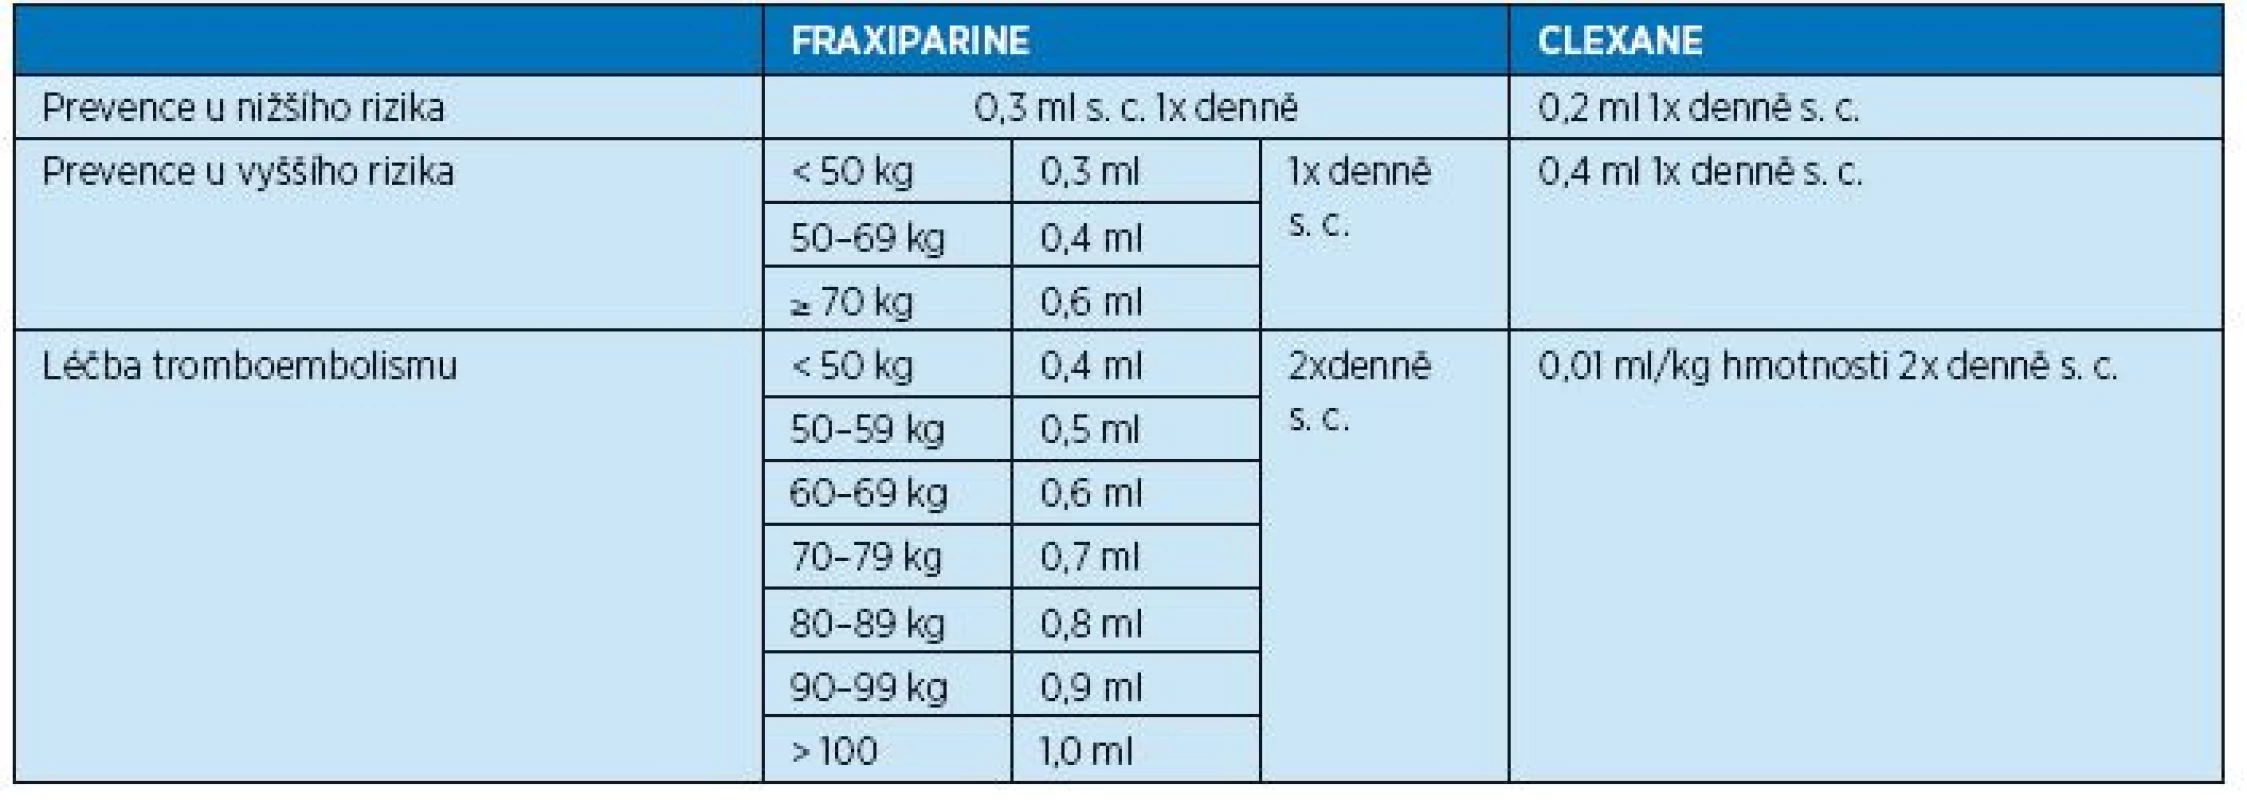 Dávkovací schéma preparátu Fraxiparine a Clexane podle tělesné hmotnosti